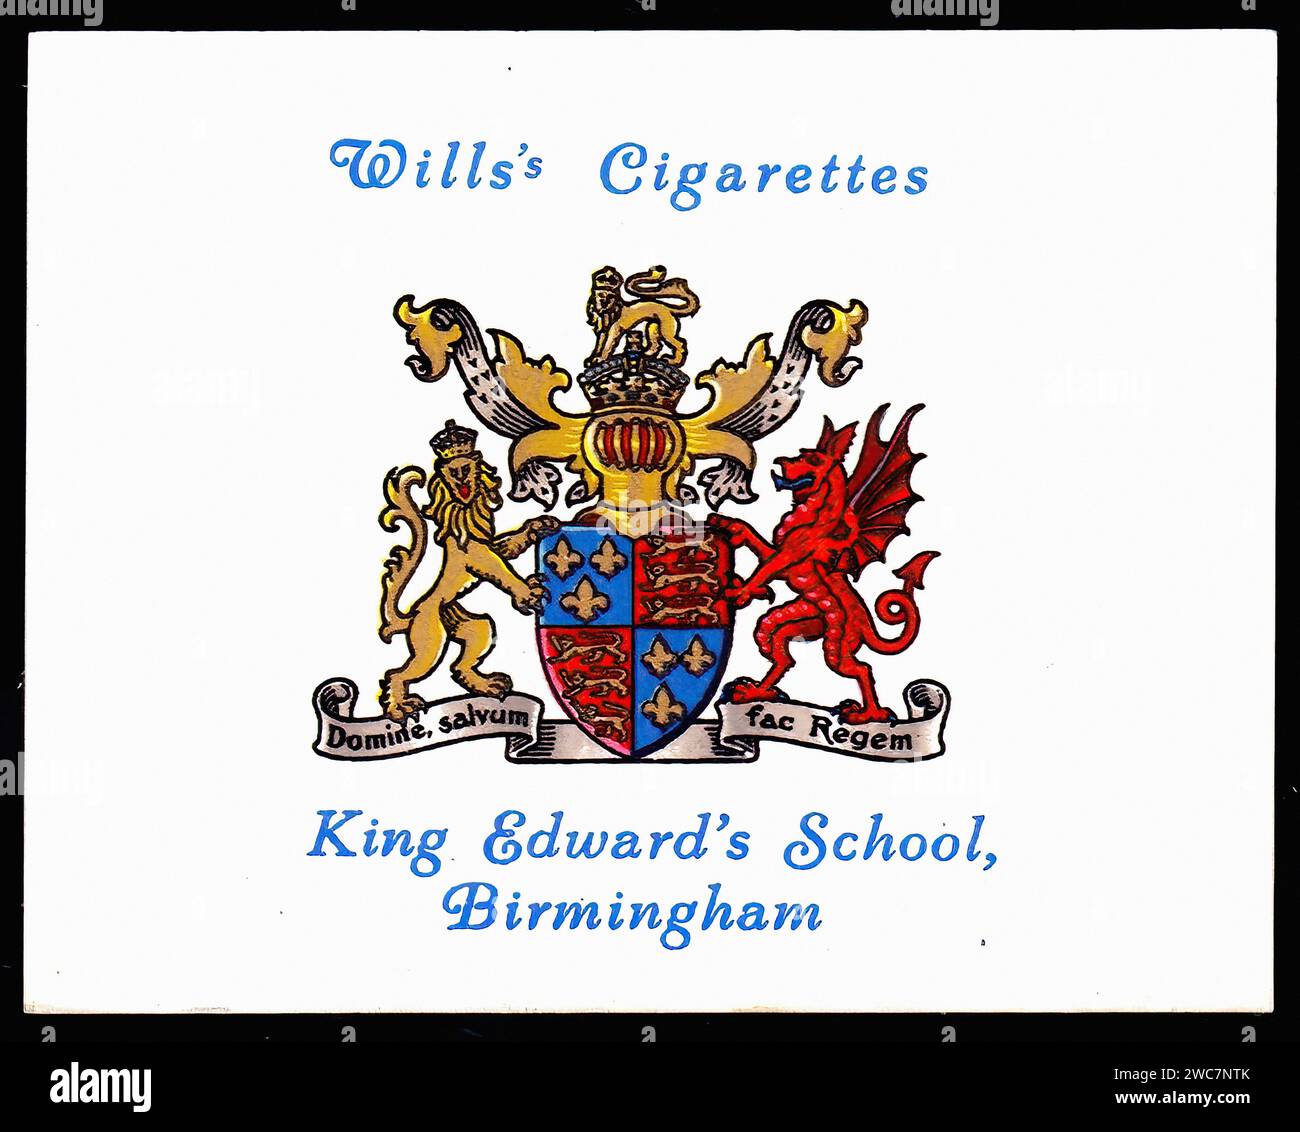 Arms of King Edward's School - Vintage Cigarette Card Illustration Stock Photo